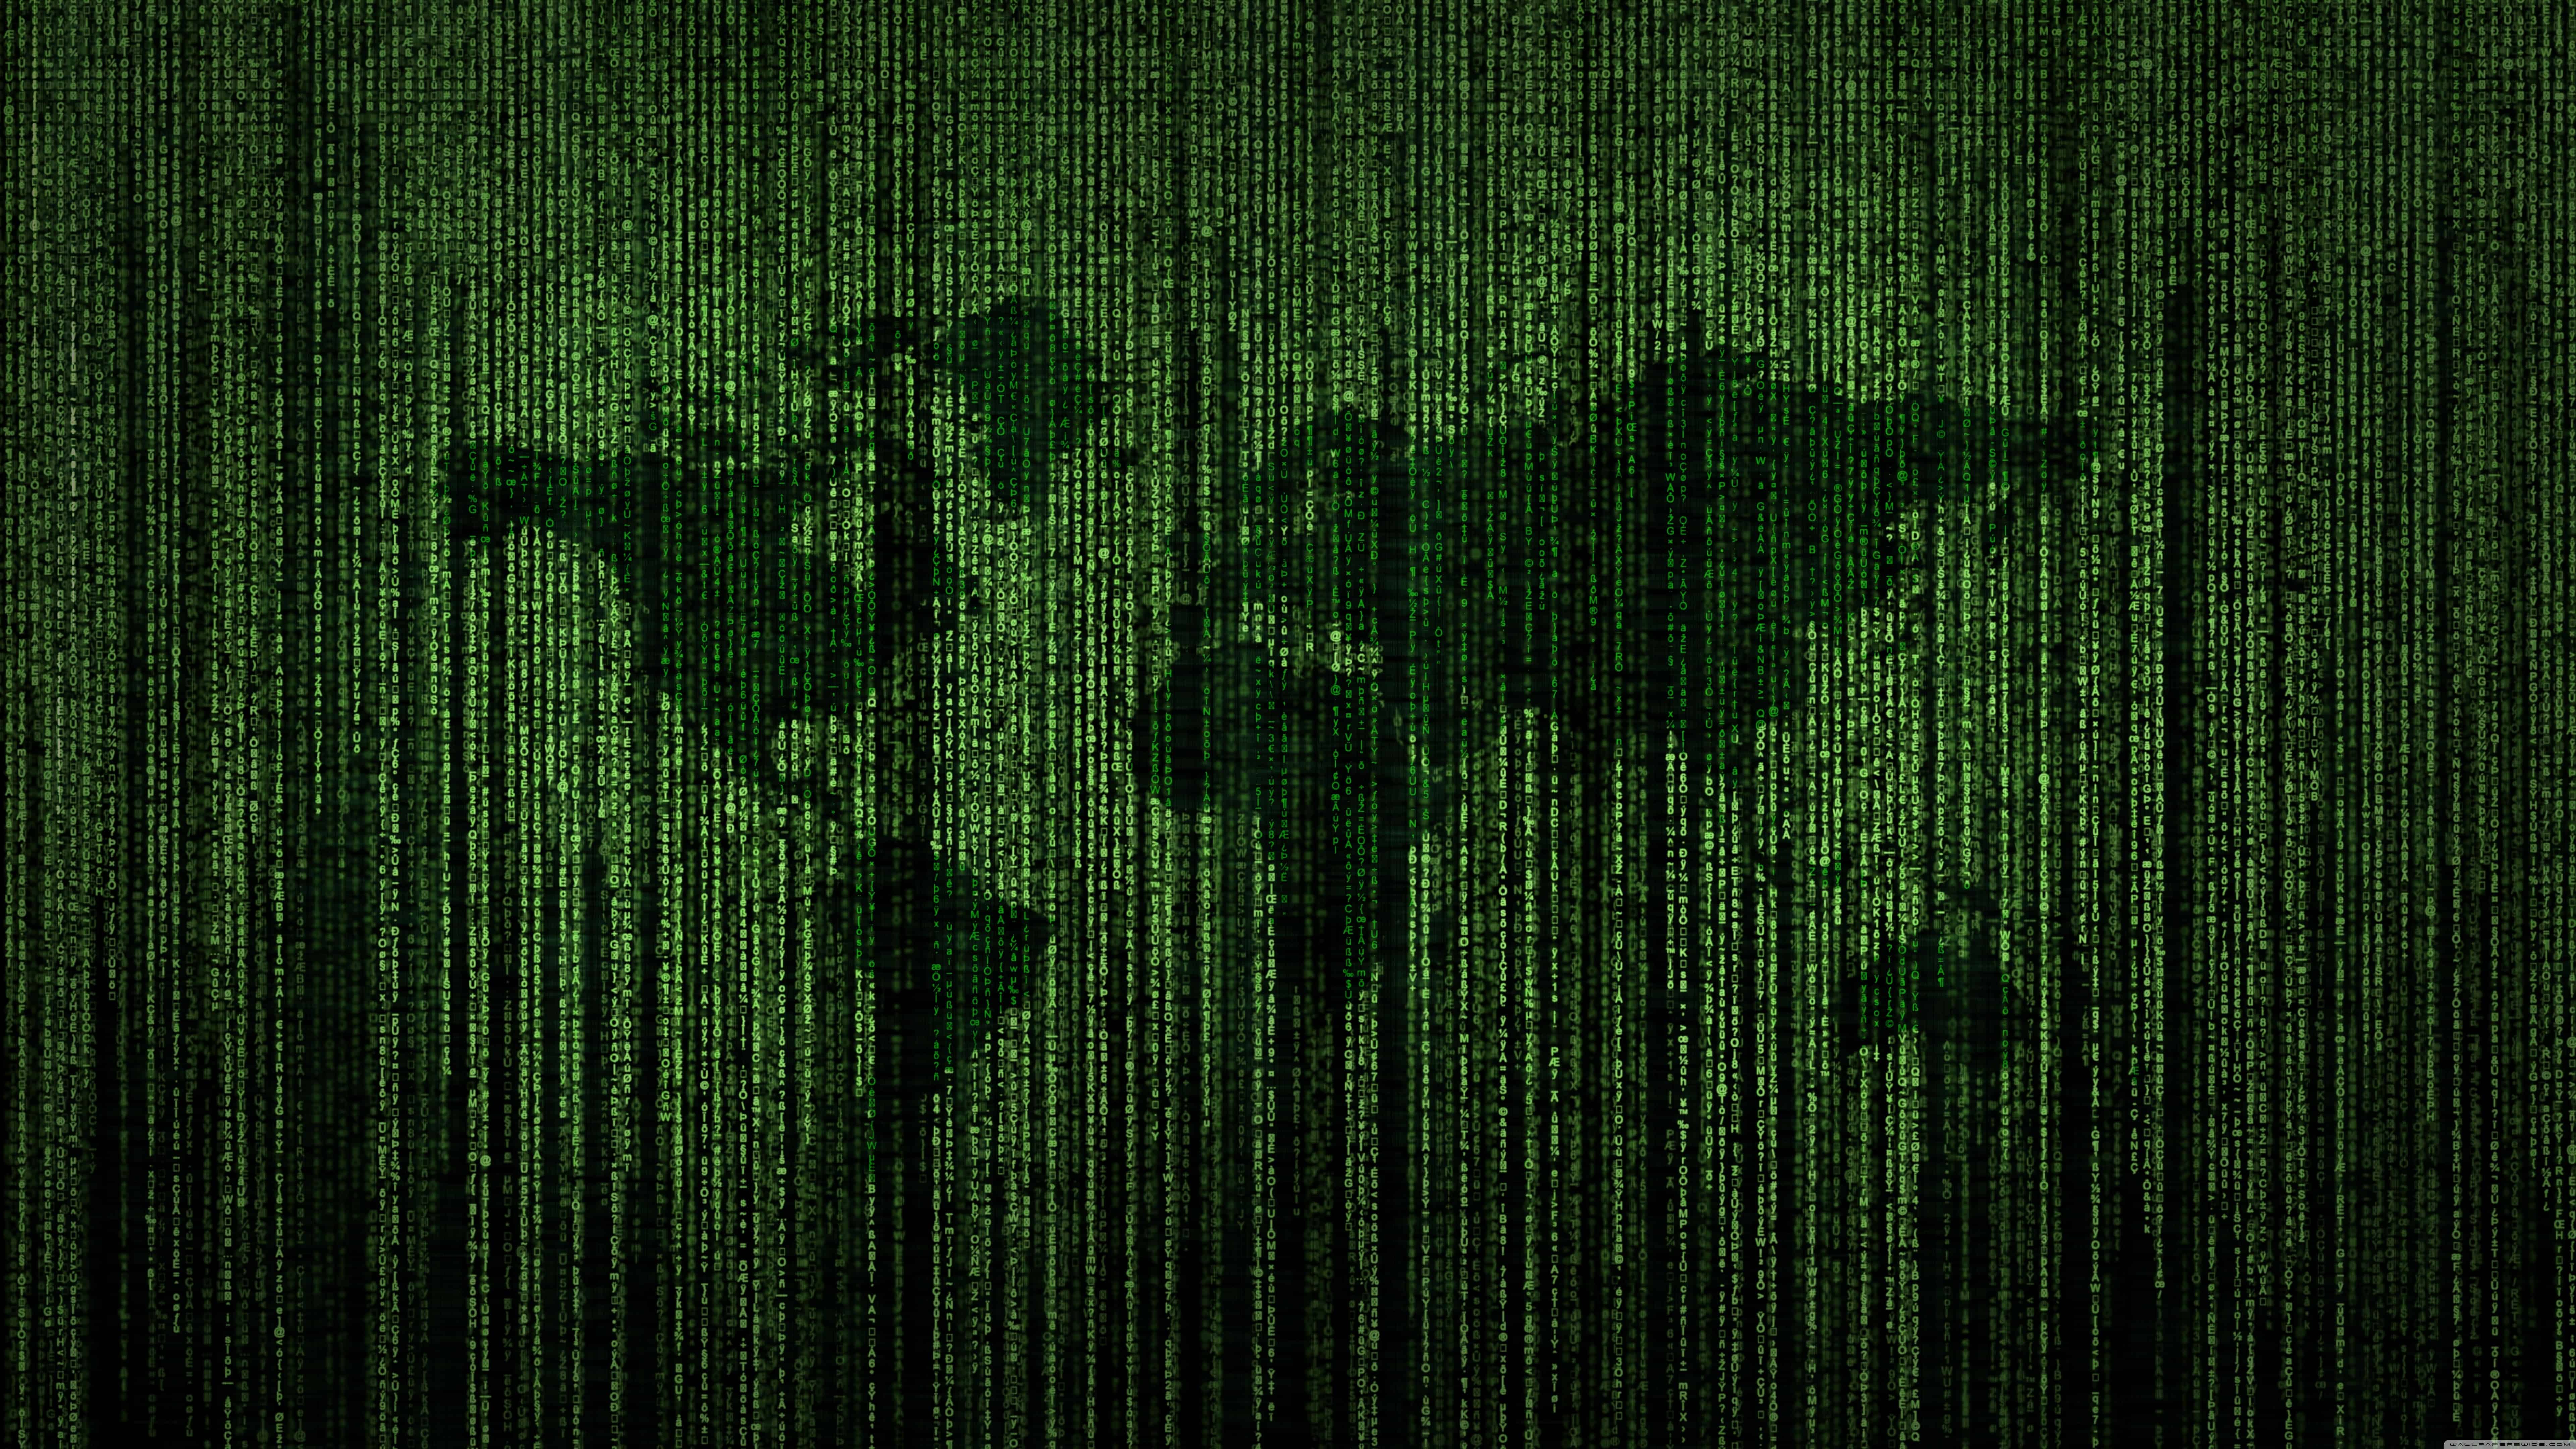 Green Matrix Code World Map UHD 8K Fondo de pantalla | Pixelz